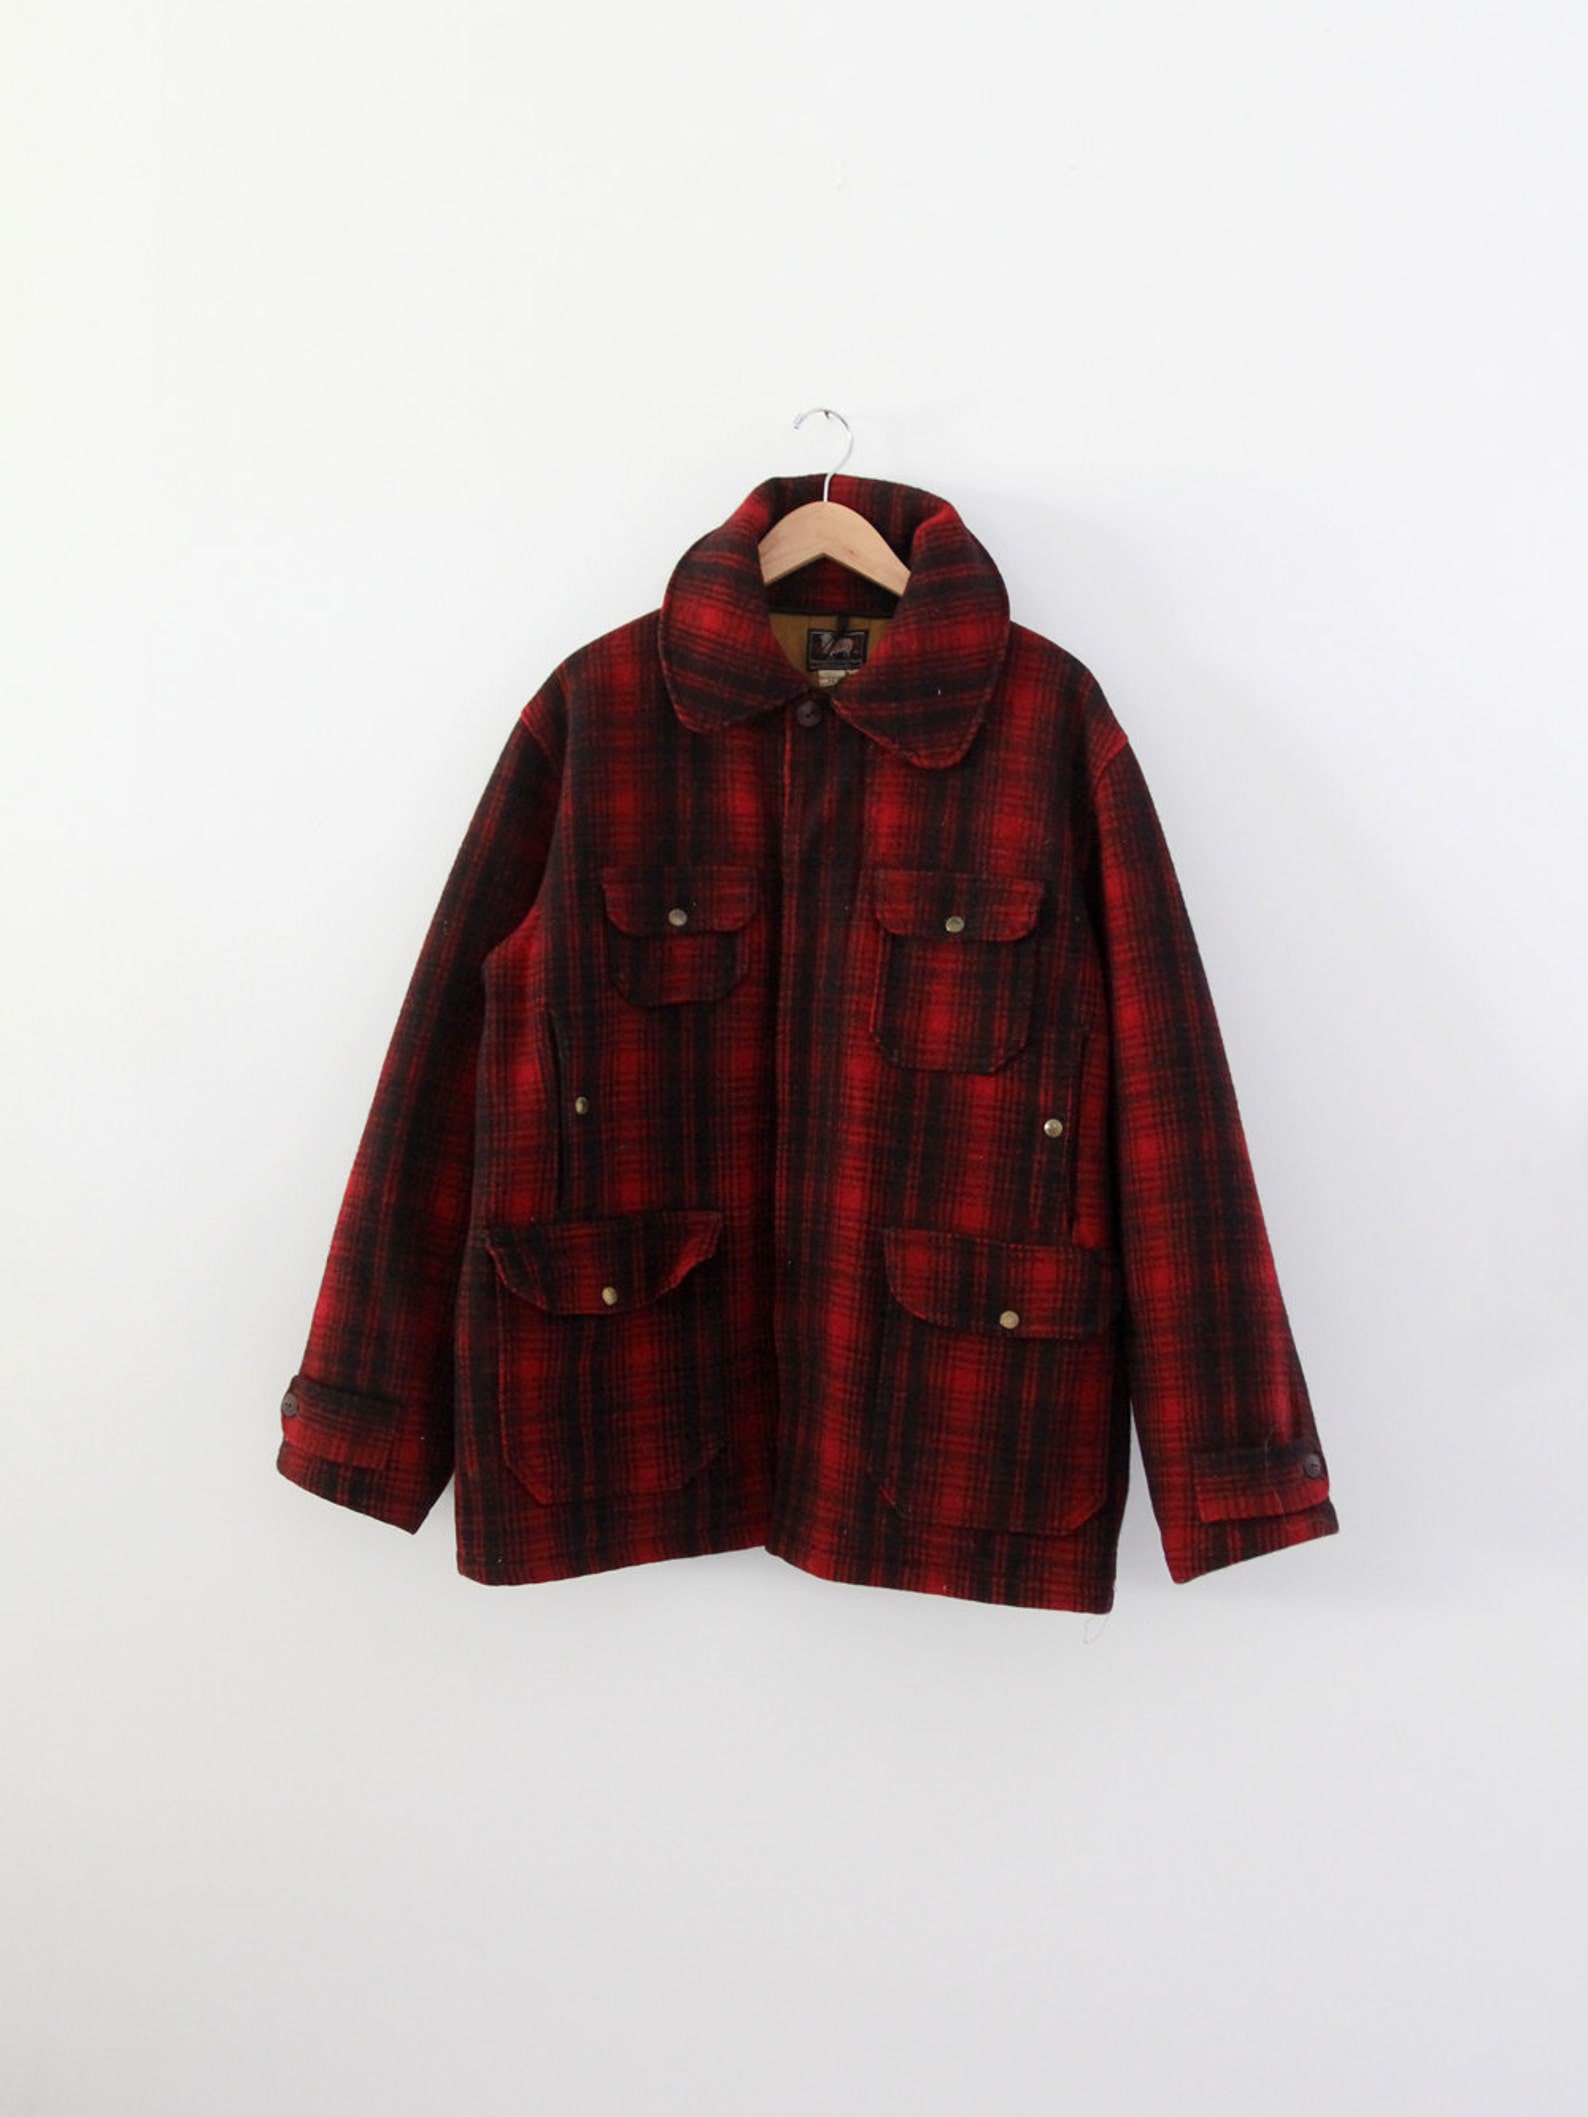 Vintage 1940s Woolrich Jacket Red Plaid Wool Jacket Mackinaw - Etsy